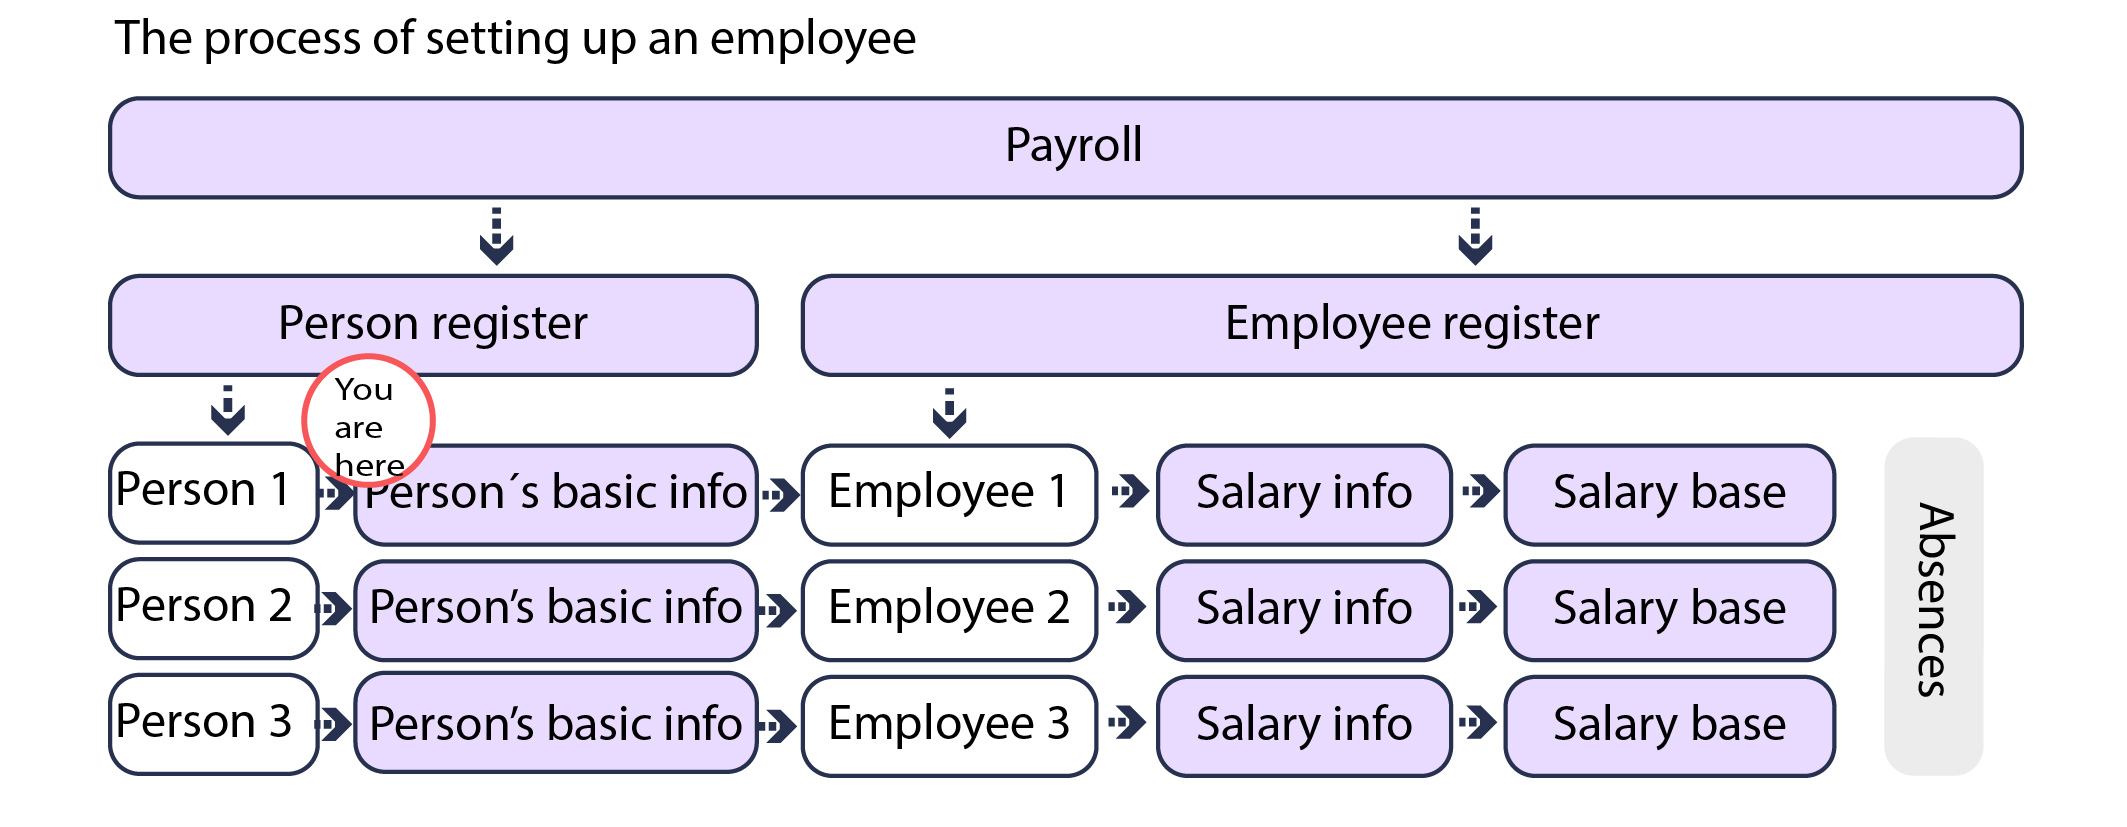 henkil_n_perustiedot_the_process_of_setting_up_an_employee_en.jpg